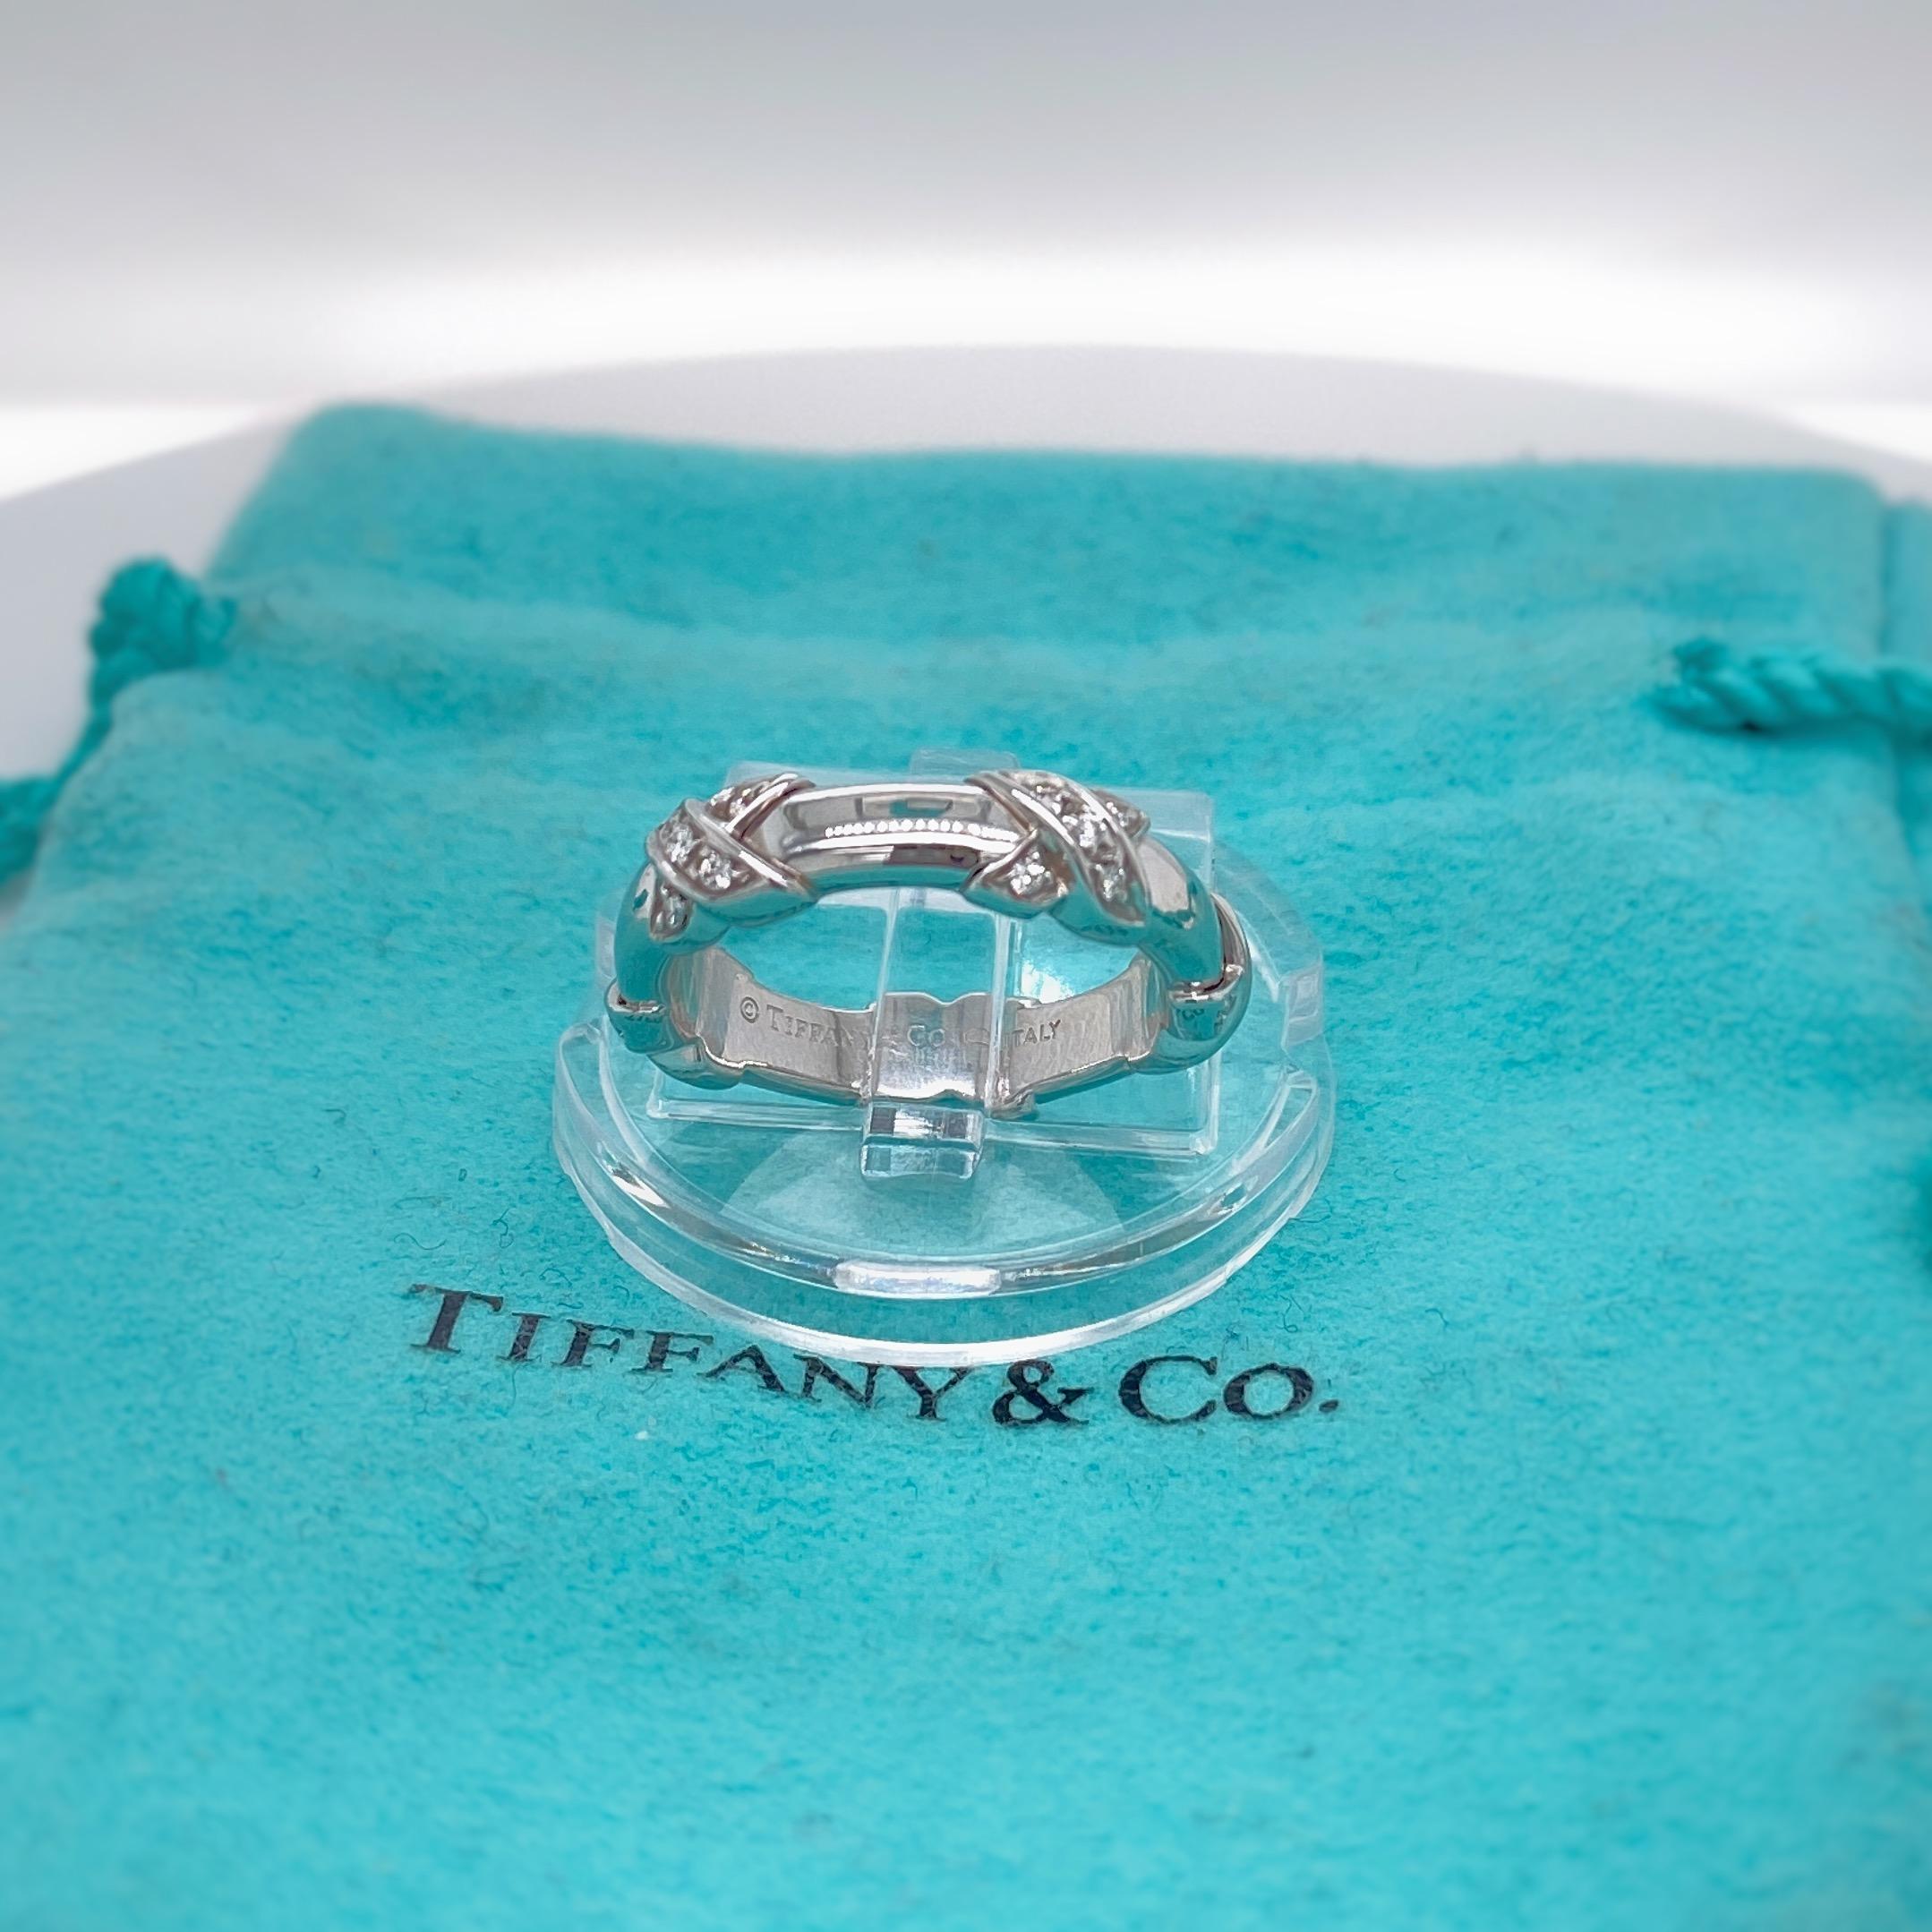 Tiffany & Co
Style:  Signature X Diamond Ring
Metal:   18 kt White Gold
Size:  4.5 
TCW:  0.15 tcw
Main Diamond:  Round Brilliant Cut Diamonds
Color & Clarity:  F - VS
Hallmark:  ©TIFFANY&CO.750 Italy
Includes:  T&C Jewelry Pouch
Retail: 